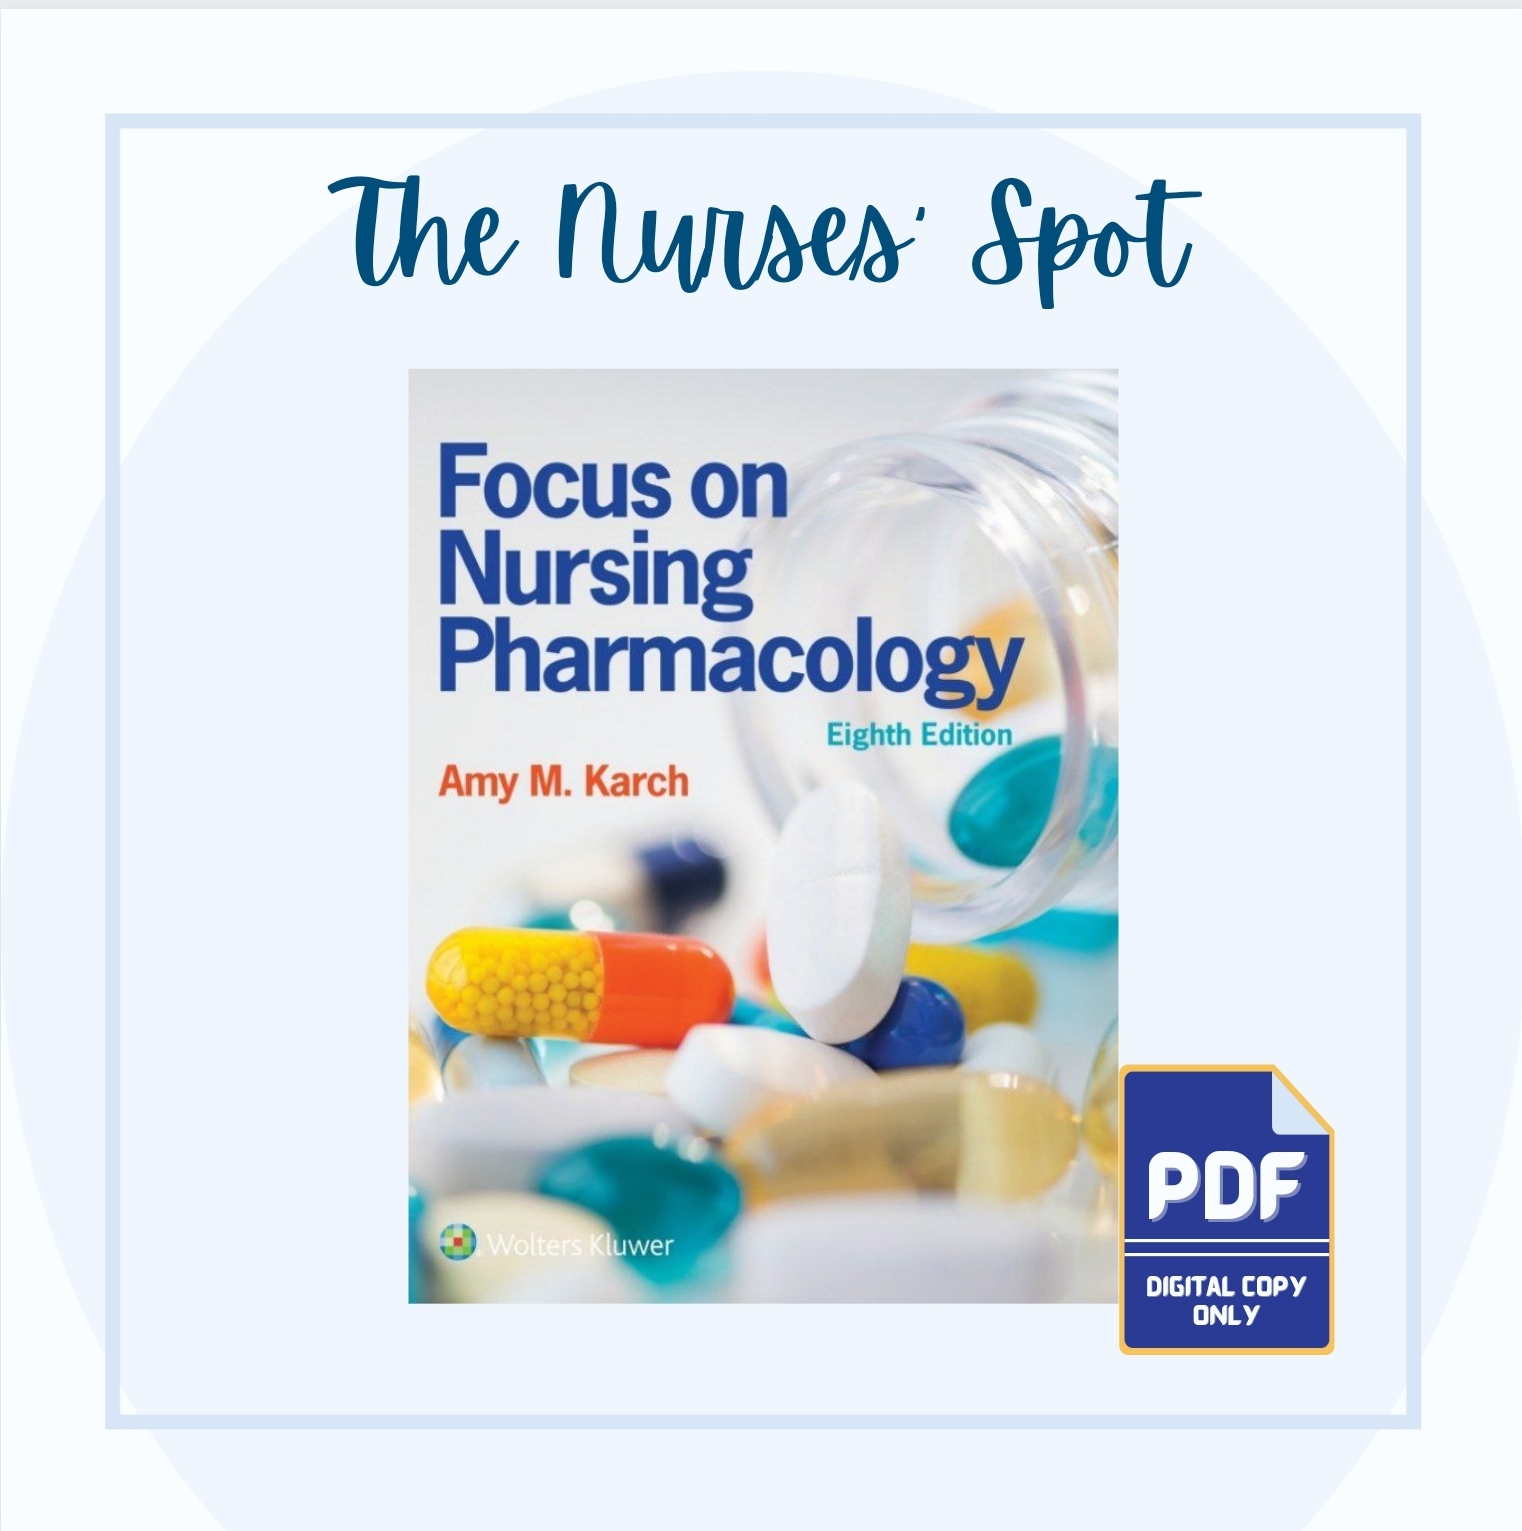 Edition　8th　Pharmacology　Nursing　Amy　Focus　PH　Karch　on　M.　Lazada